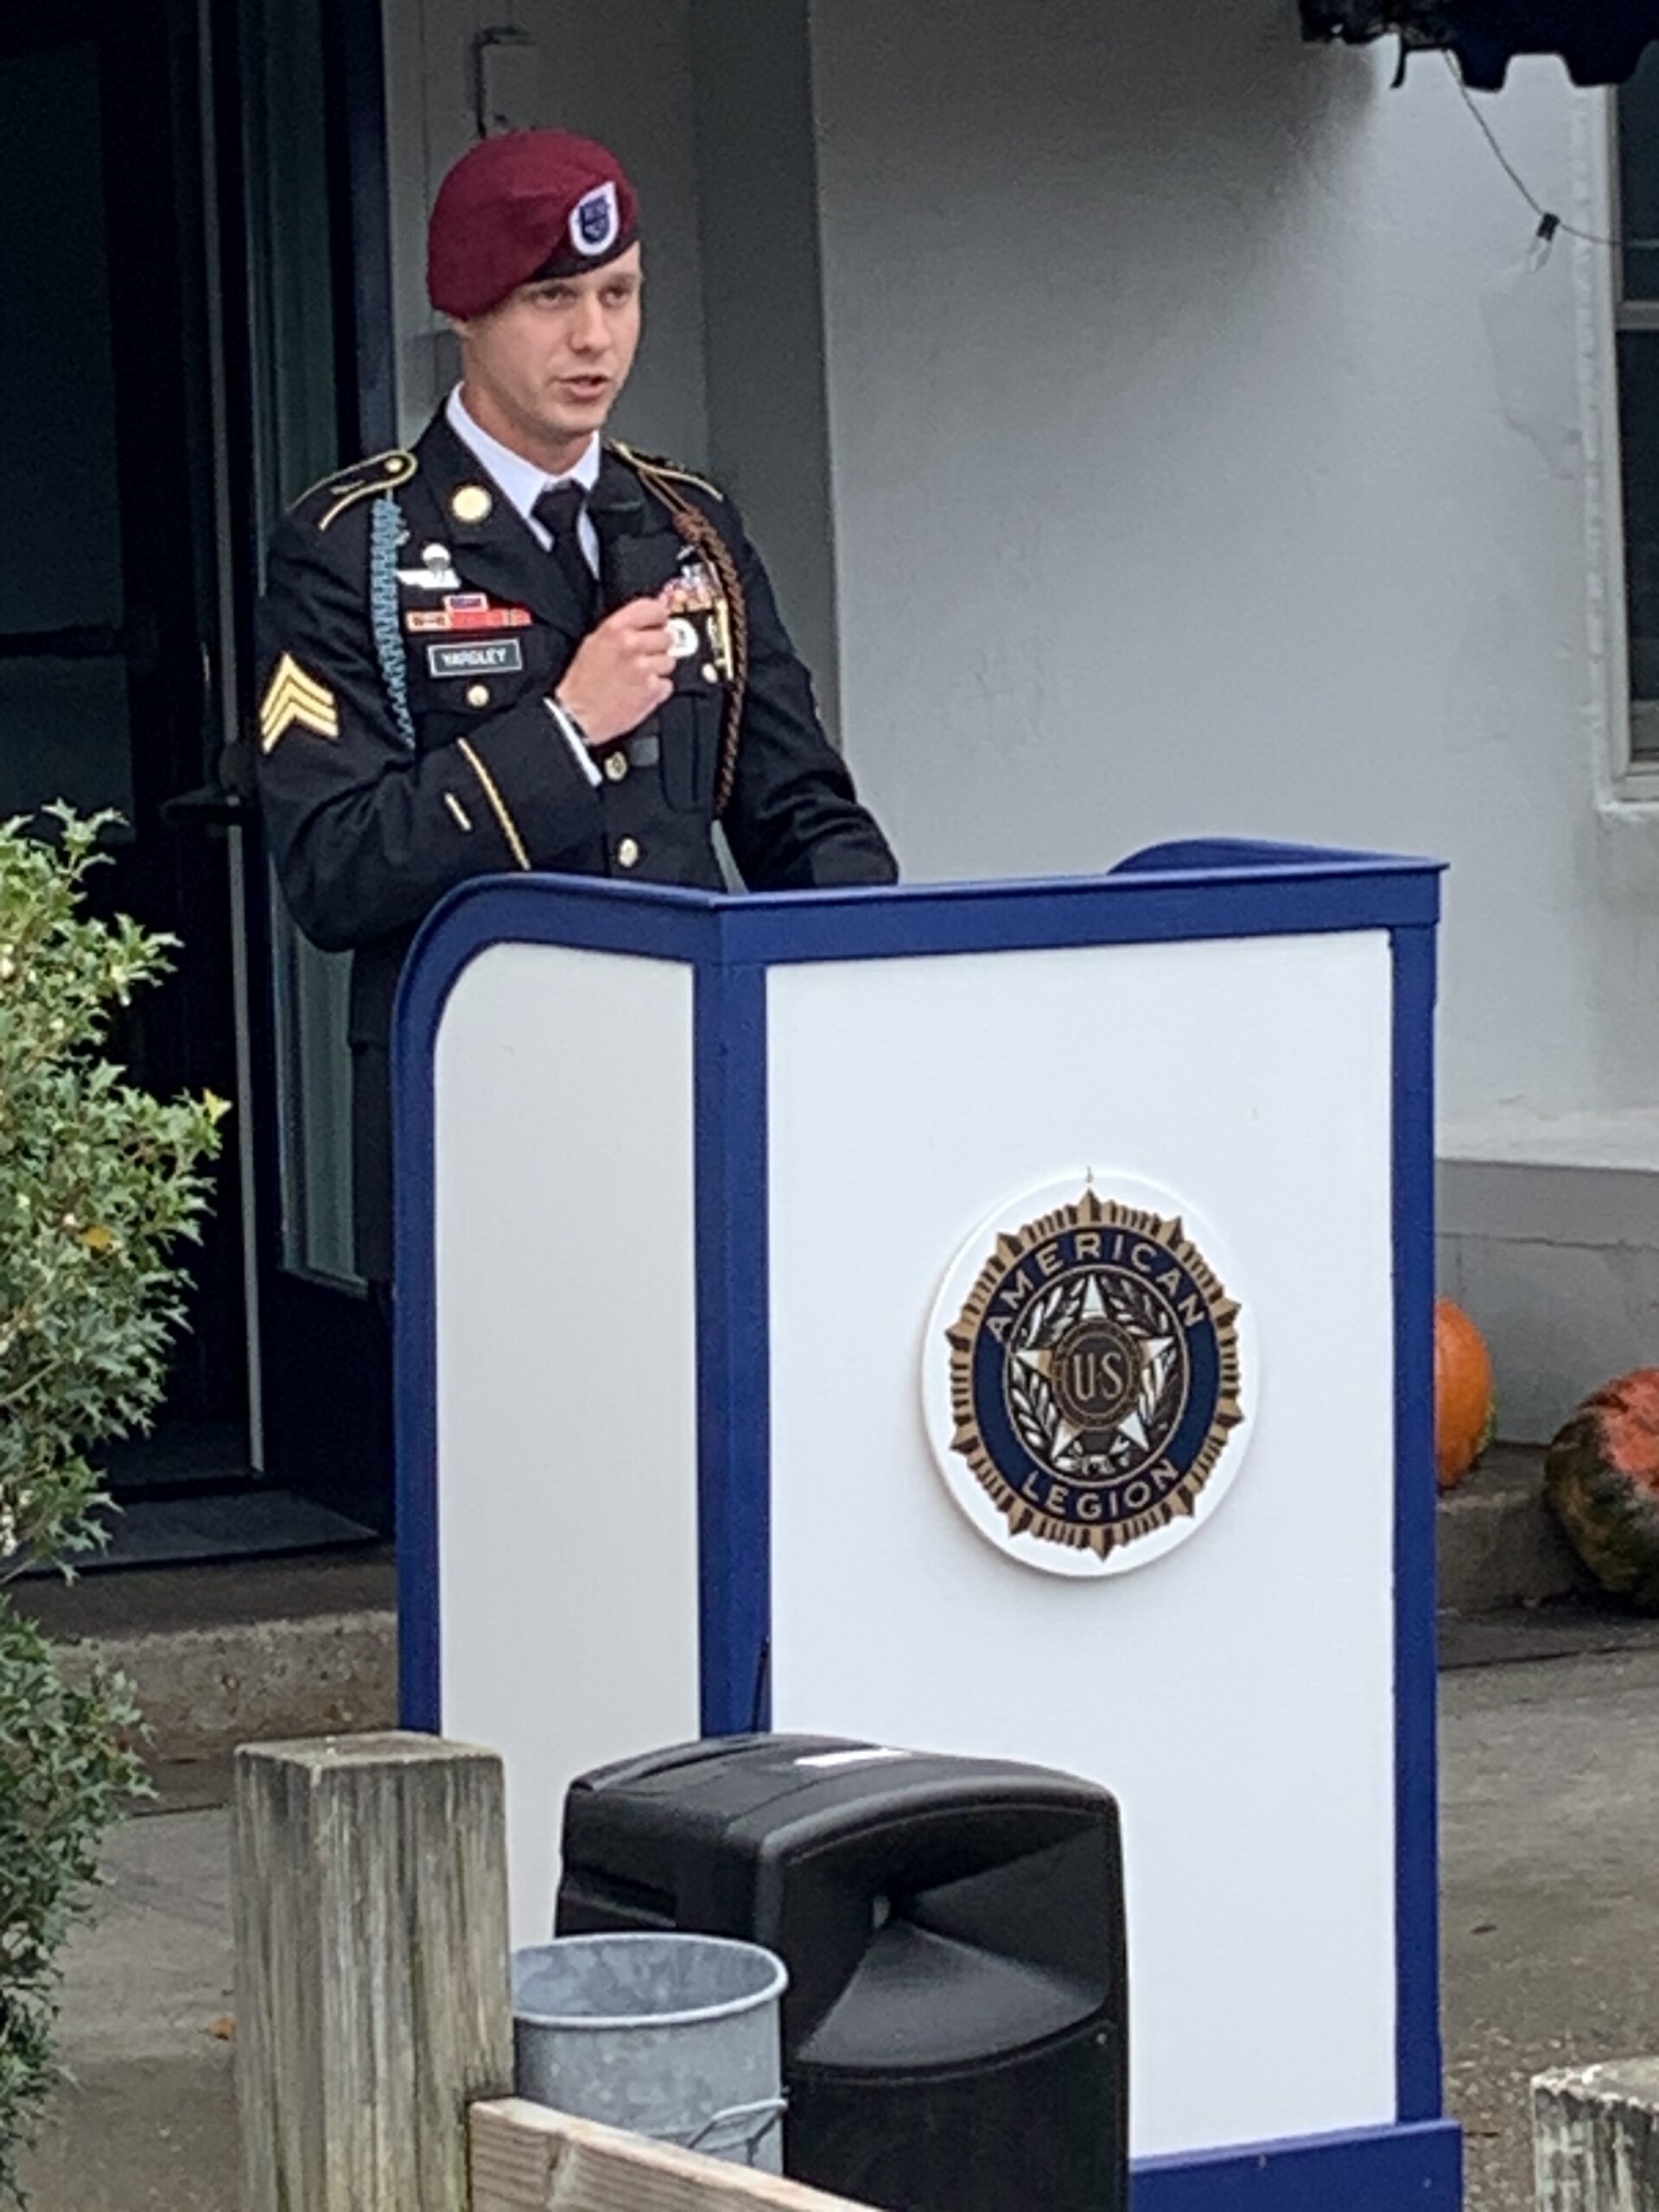 Sergeant Max Yardley gives the Veterans Day speech in Sag Harbor. STEPHEN J. KOTZ